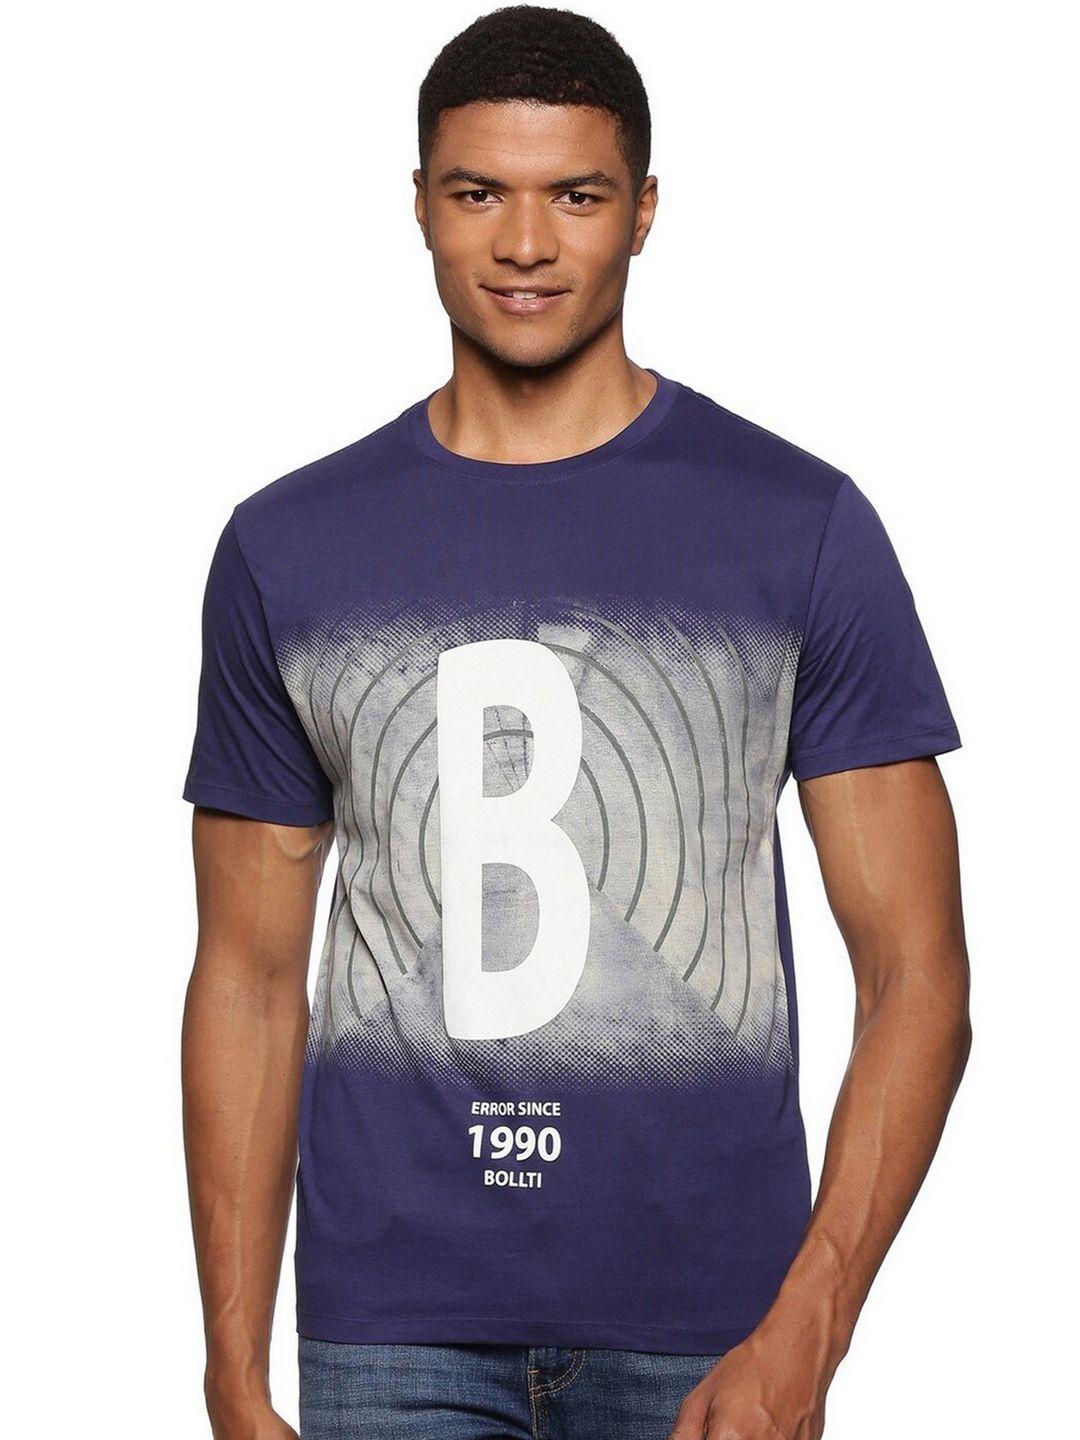 bollti typography printed round neck cotton t-shirt